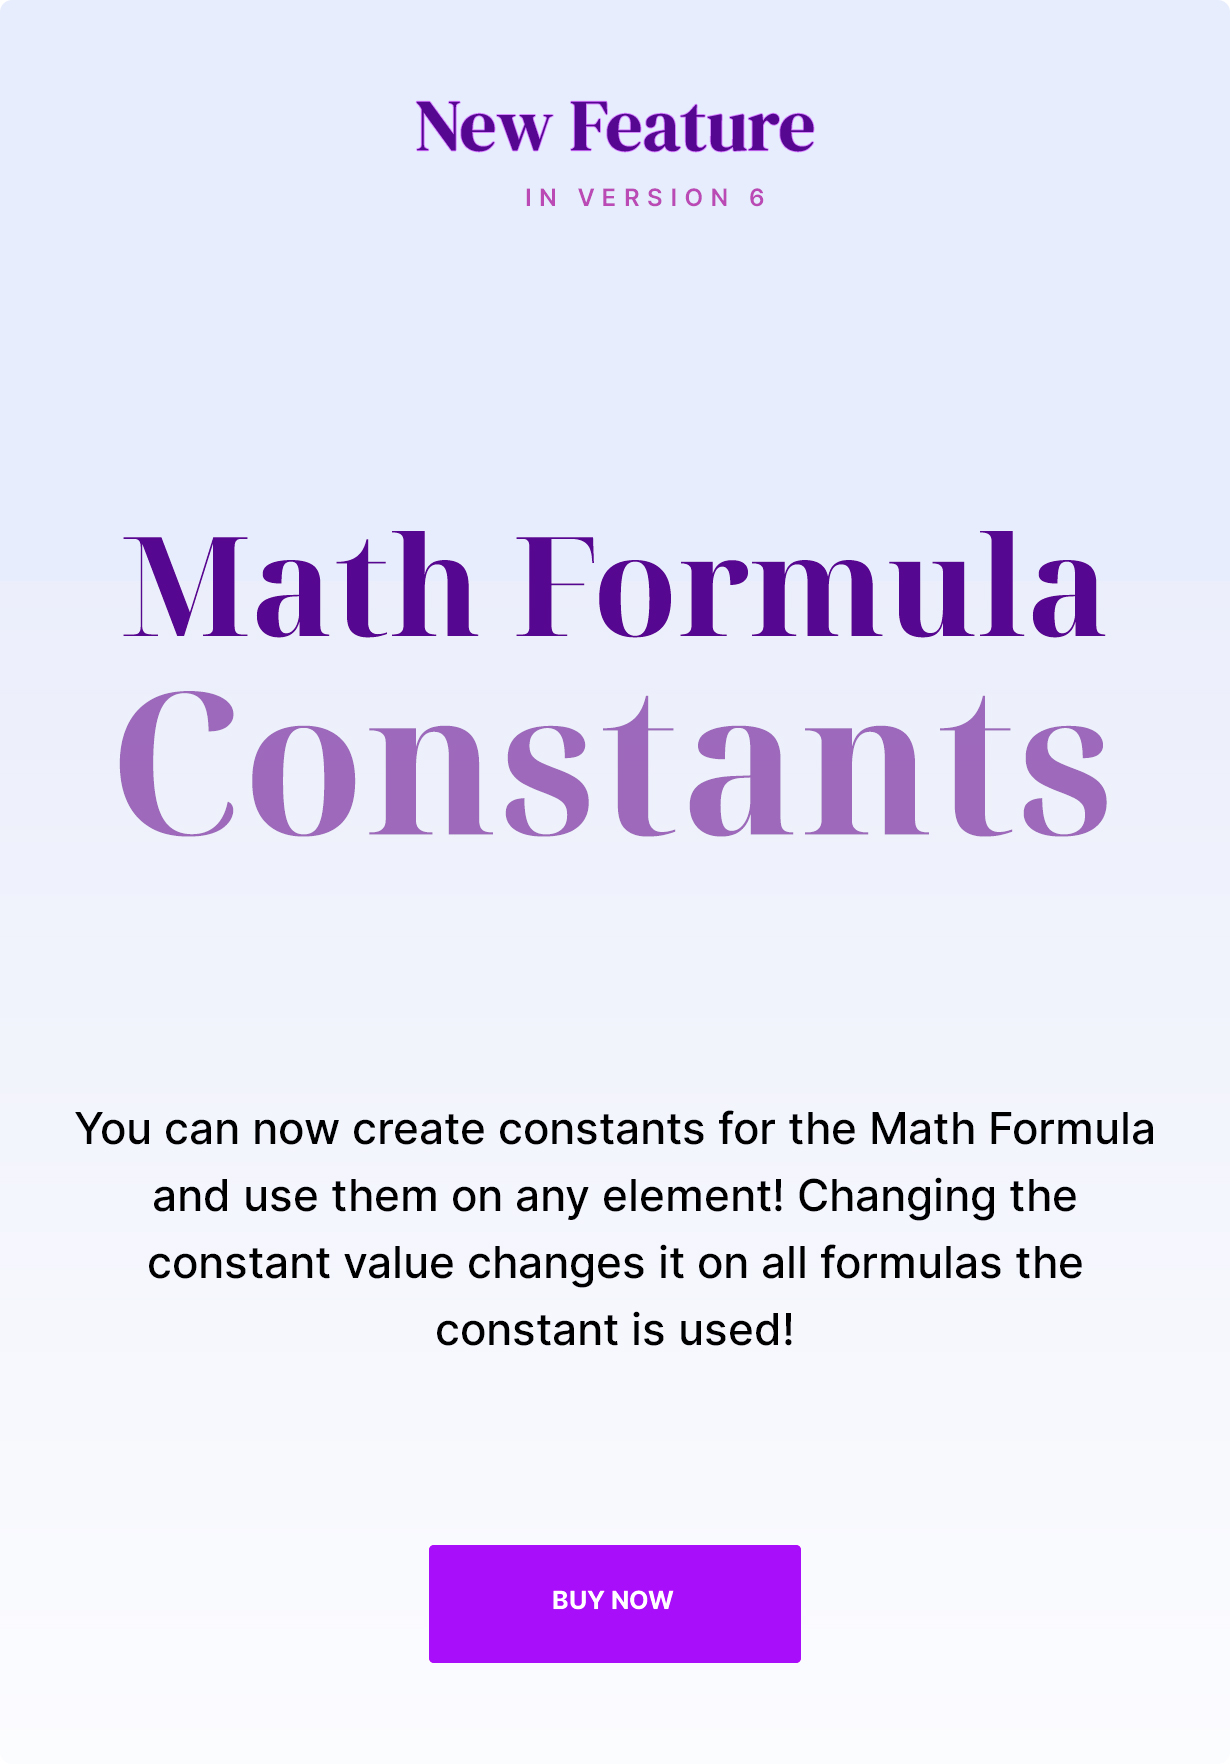 Feature Math Constants